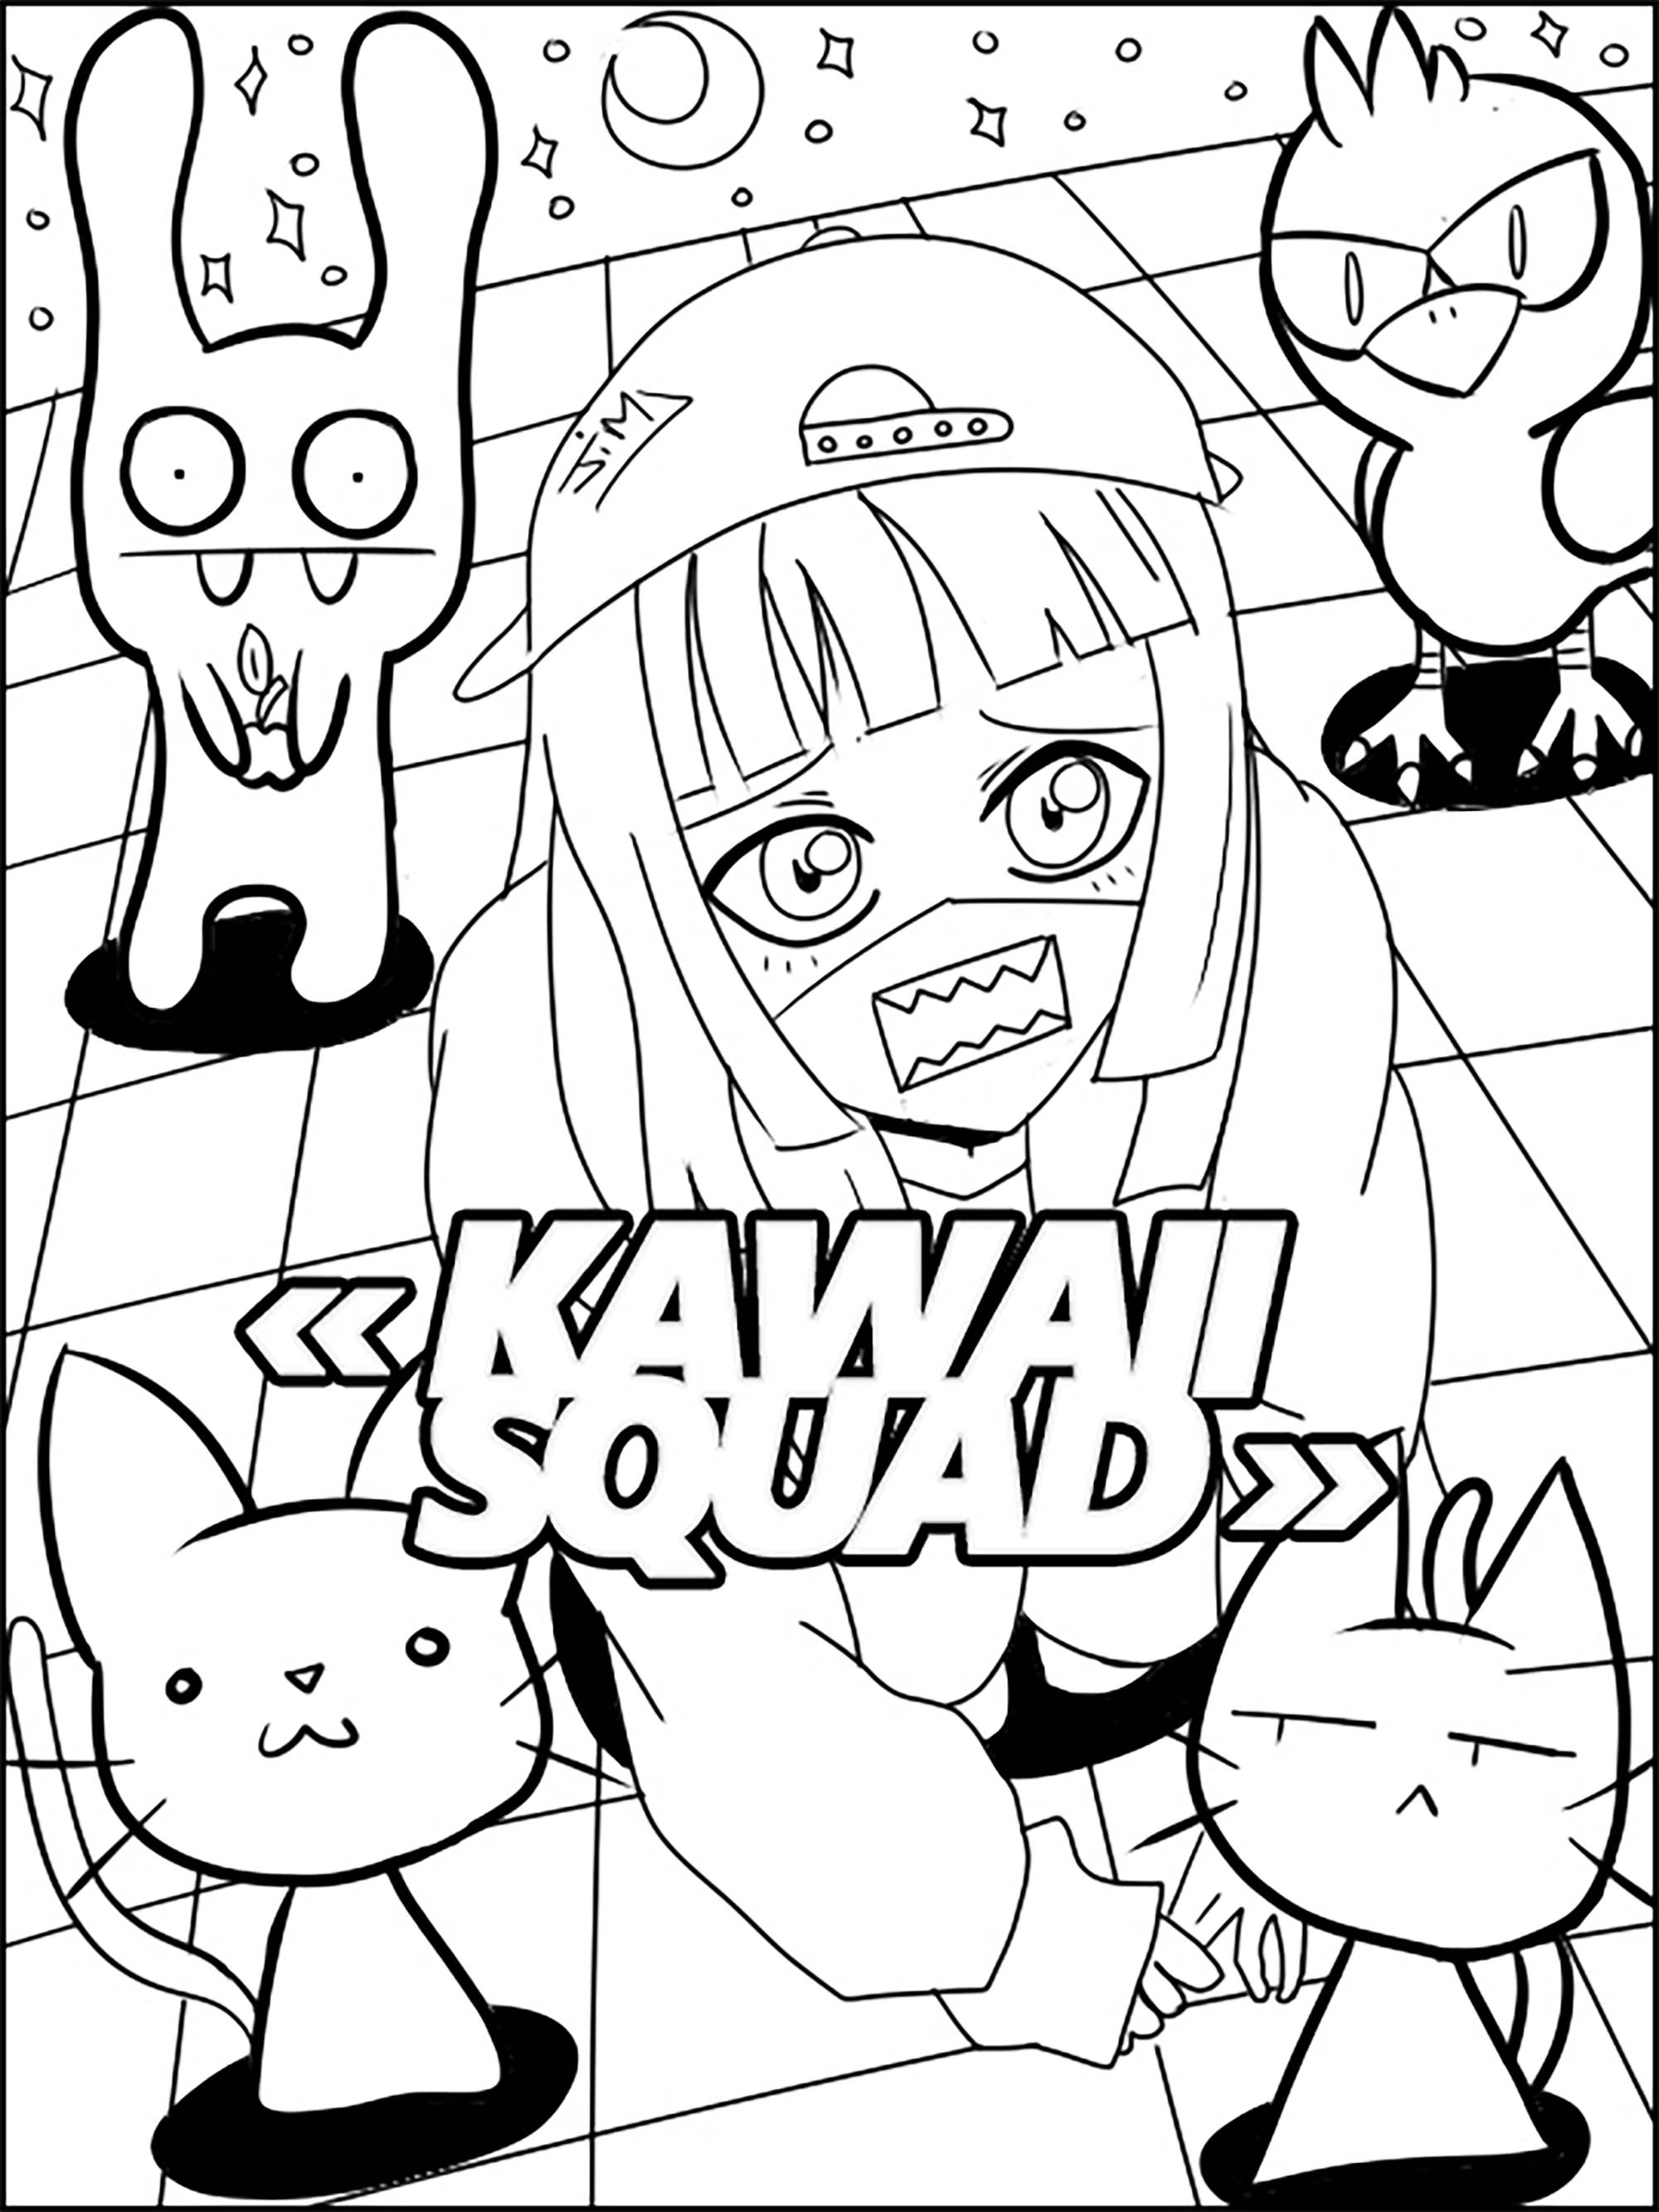 Kawaii squad, par Jim